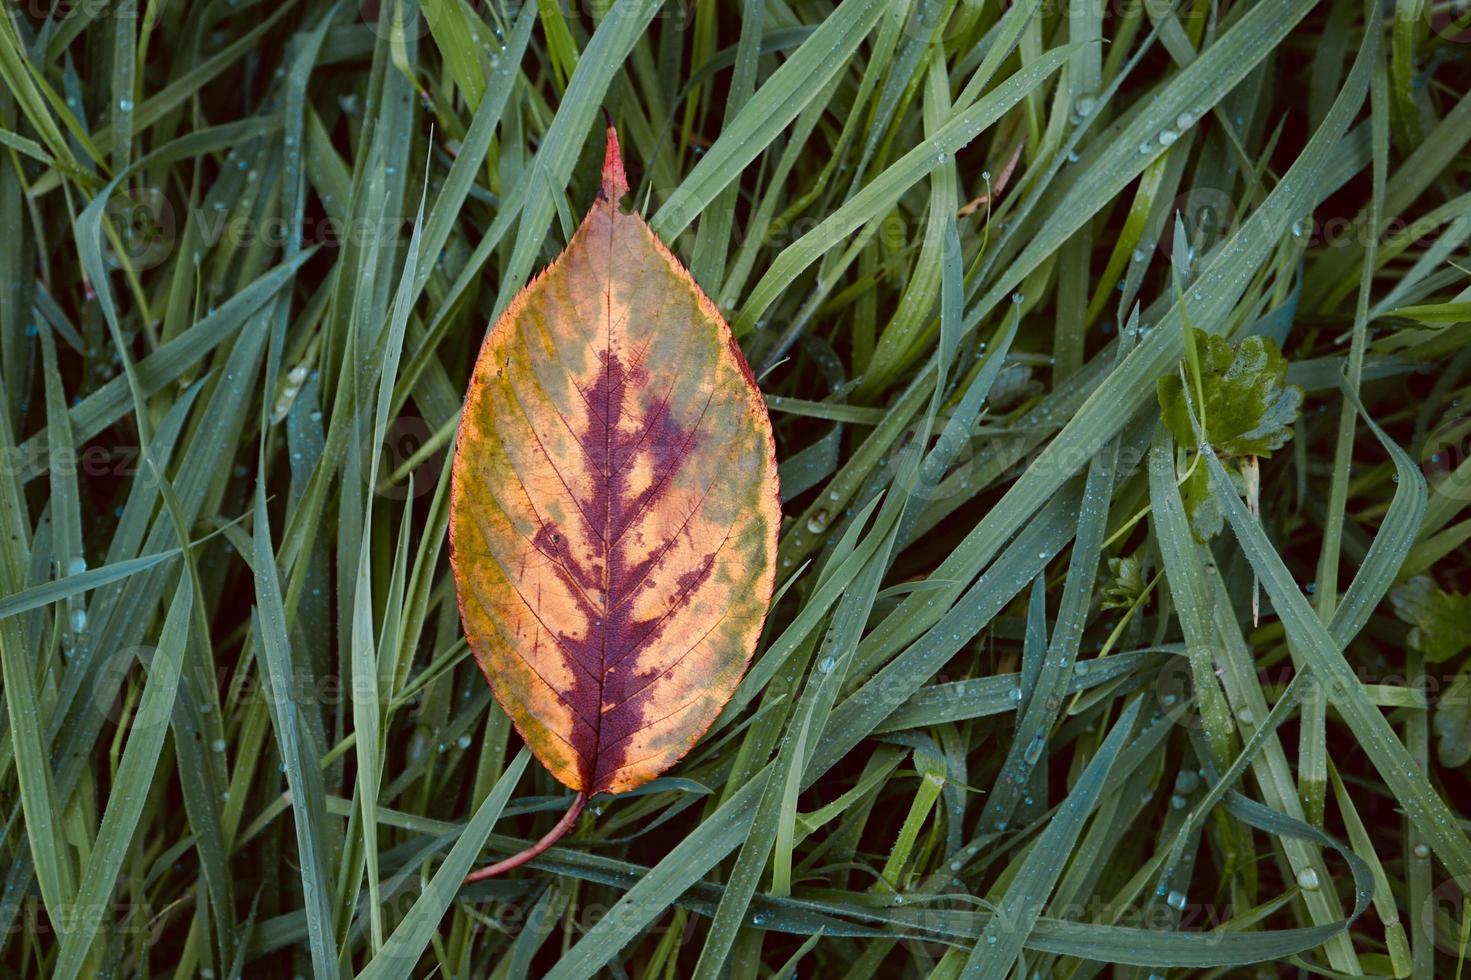 yellow tree leaf in autumn season photo